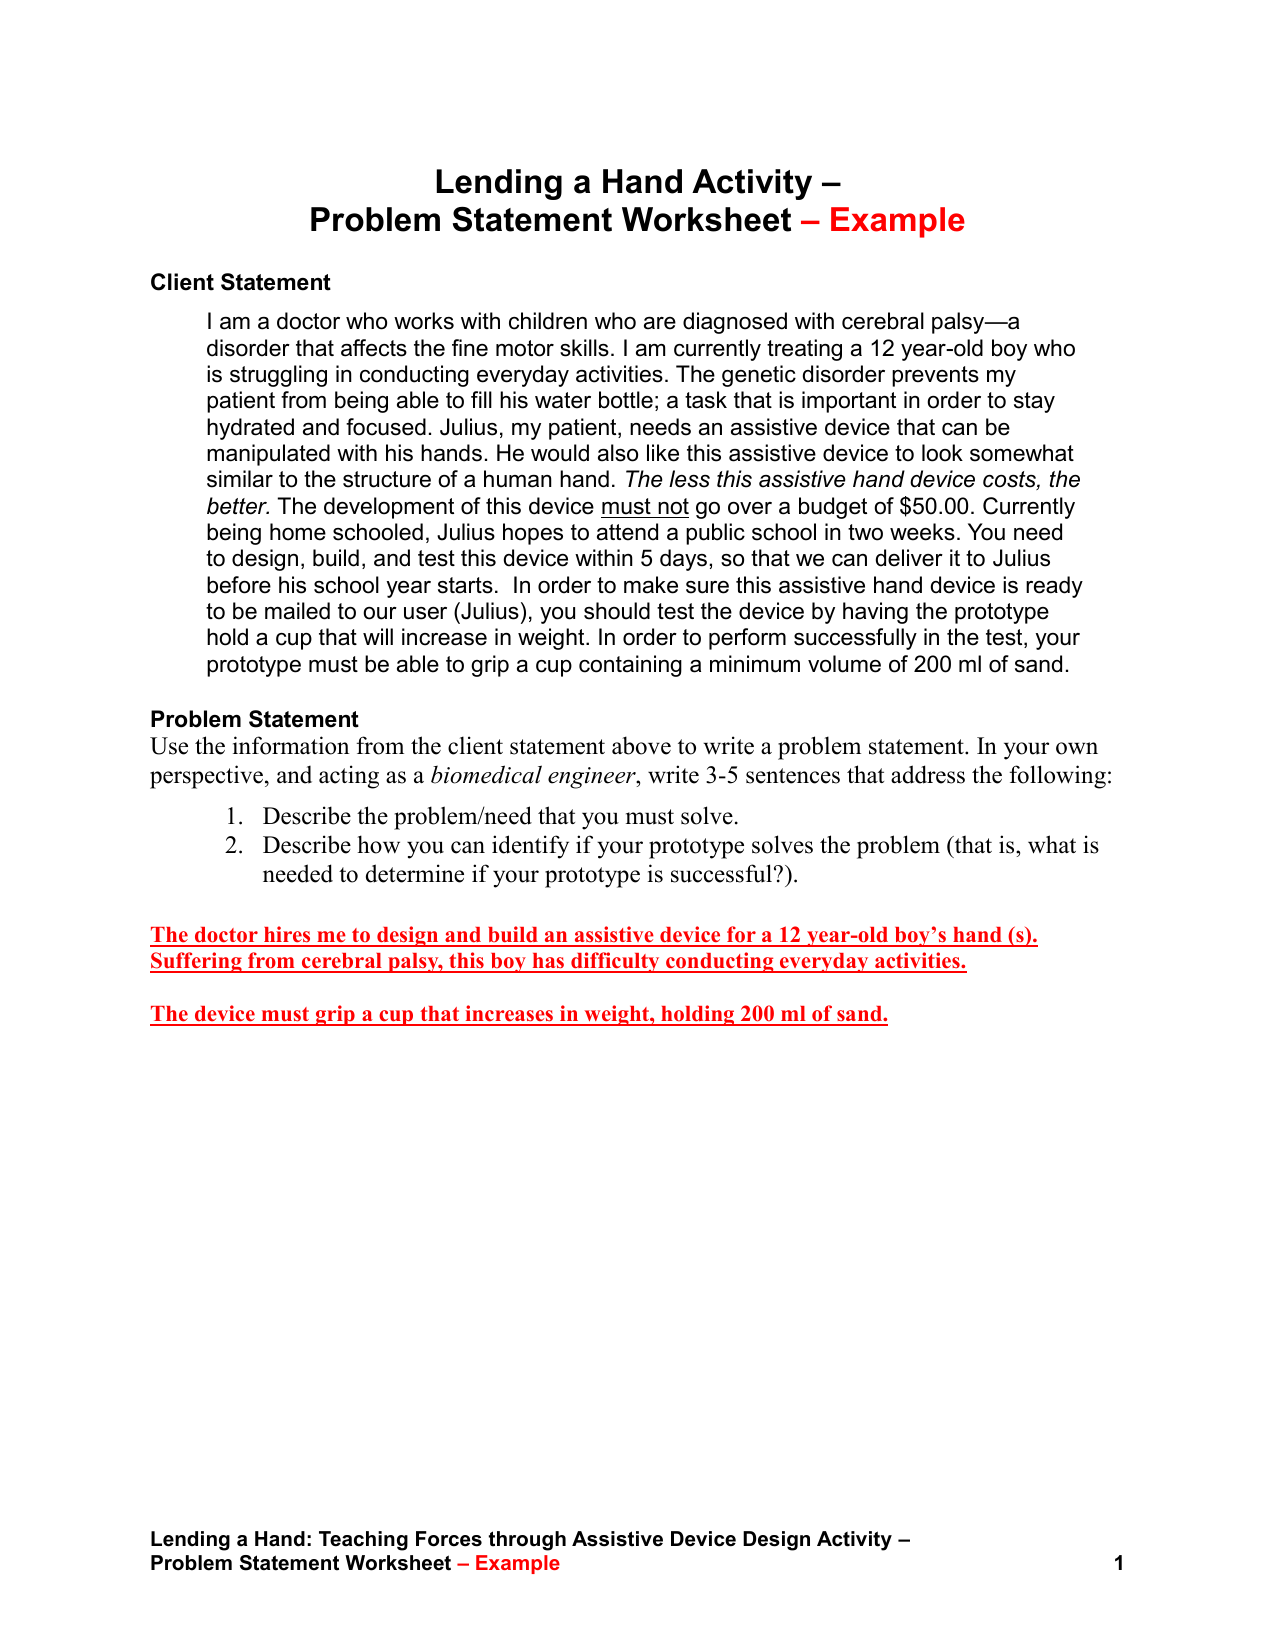 Problem Statement Worksheet – Example